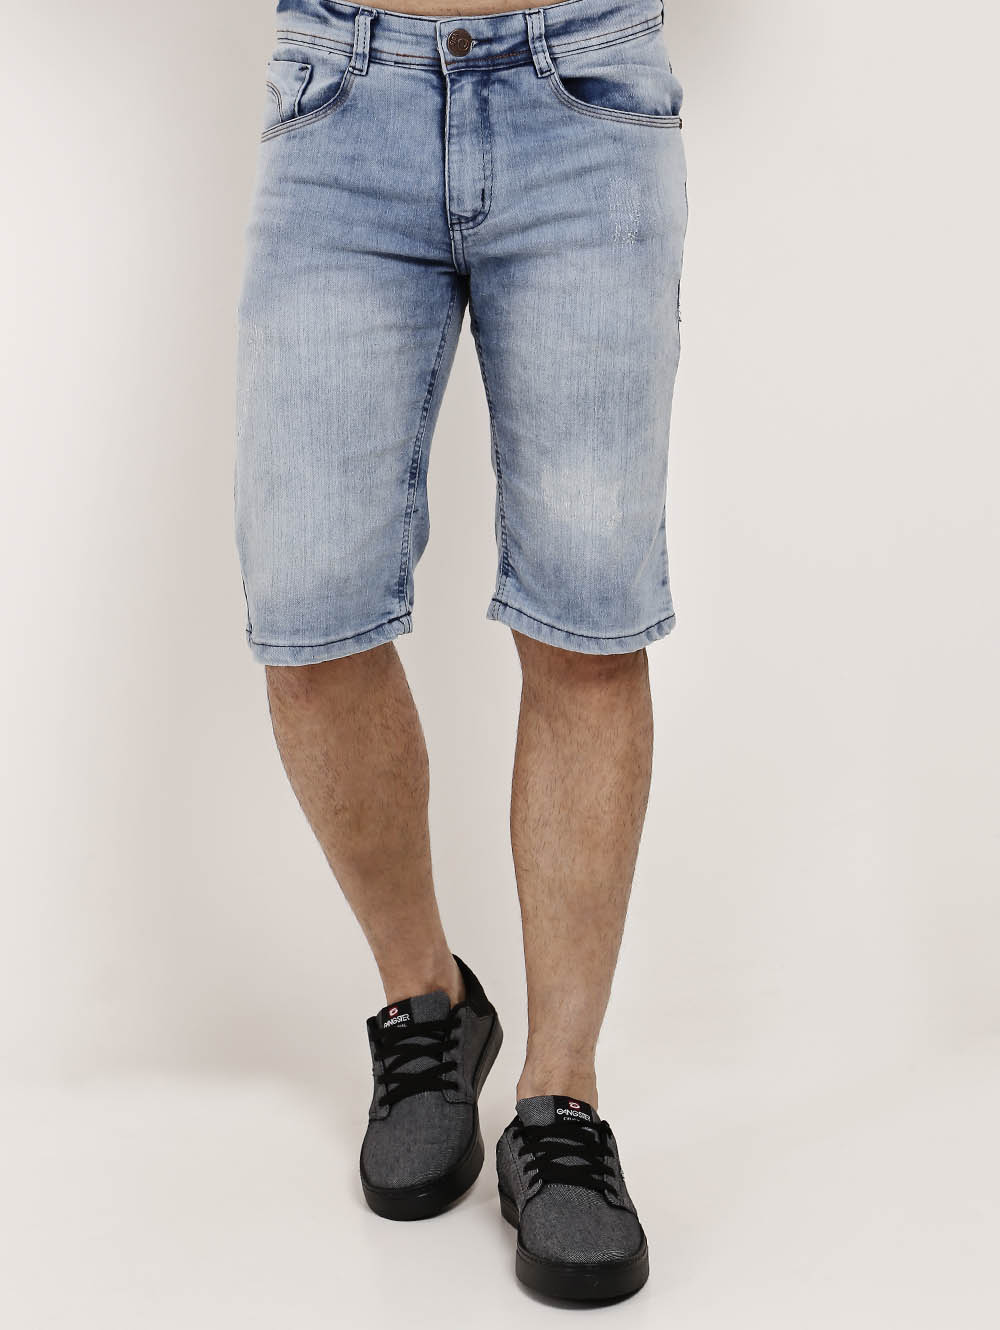 bermuda jeans masculina com elastano